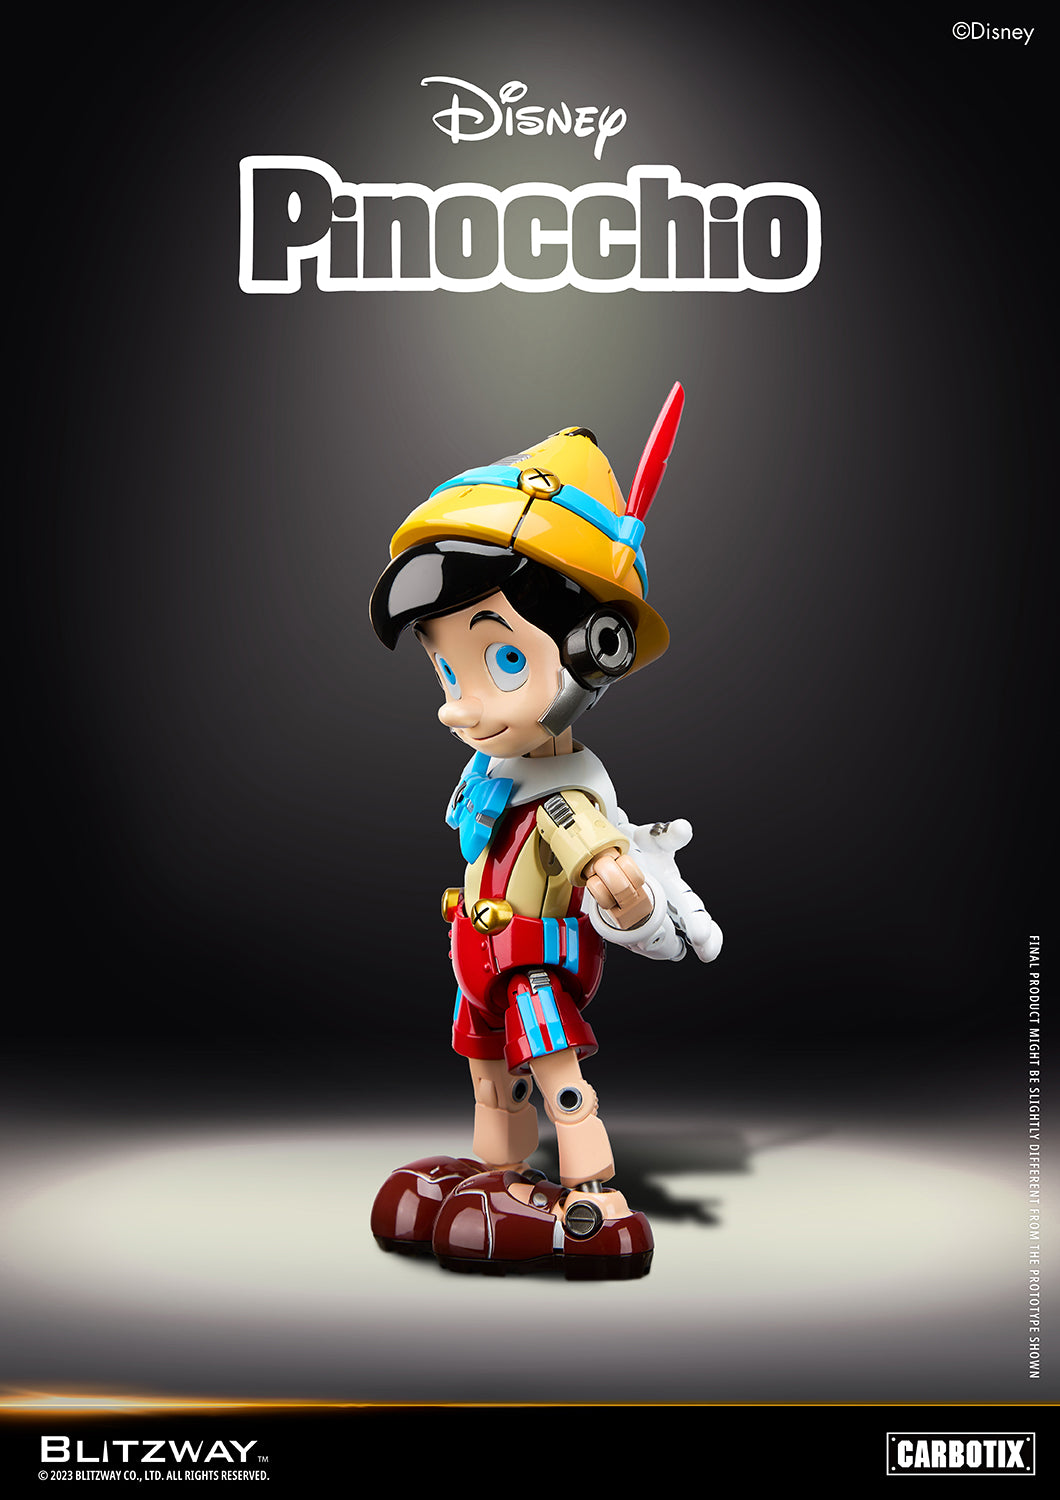 Blitzway - Carbotix - Disney's Pinocchio